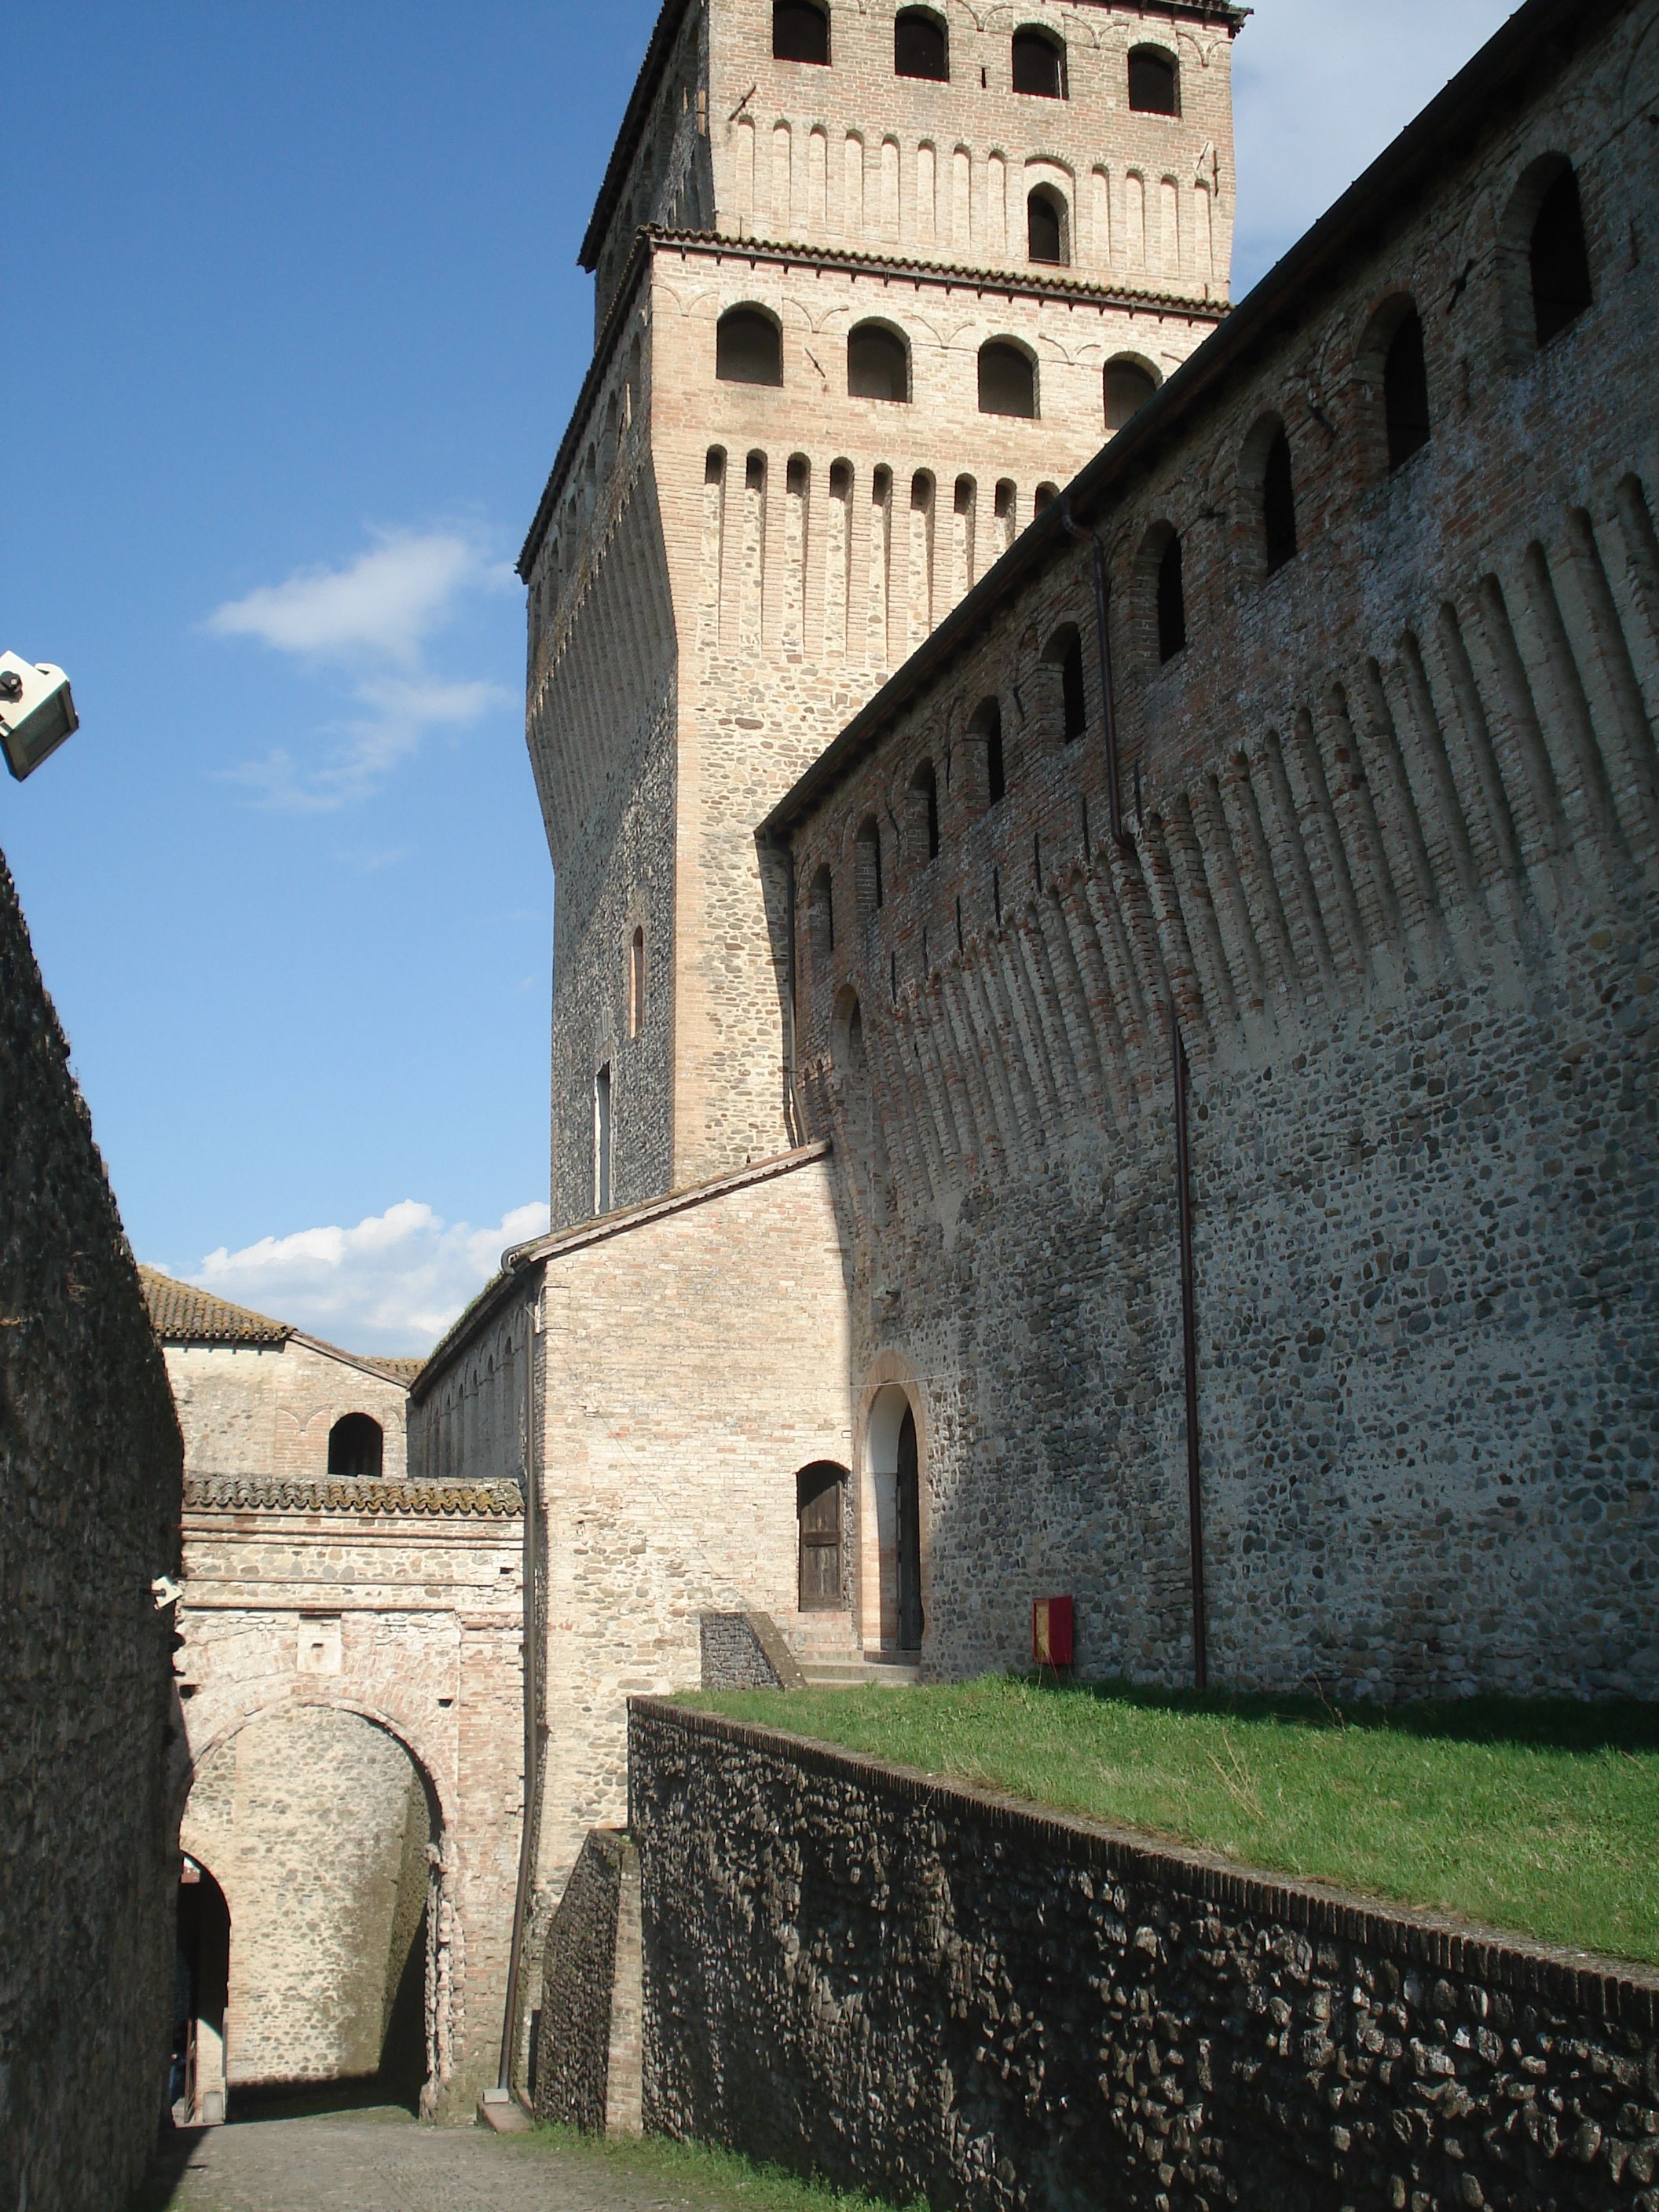 foto: https://upload.wikimedia.org/wikipedia/commons/6/6f/Castello_di_Torrechiara_05.JPG